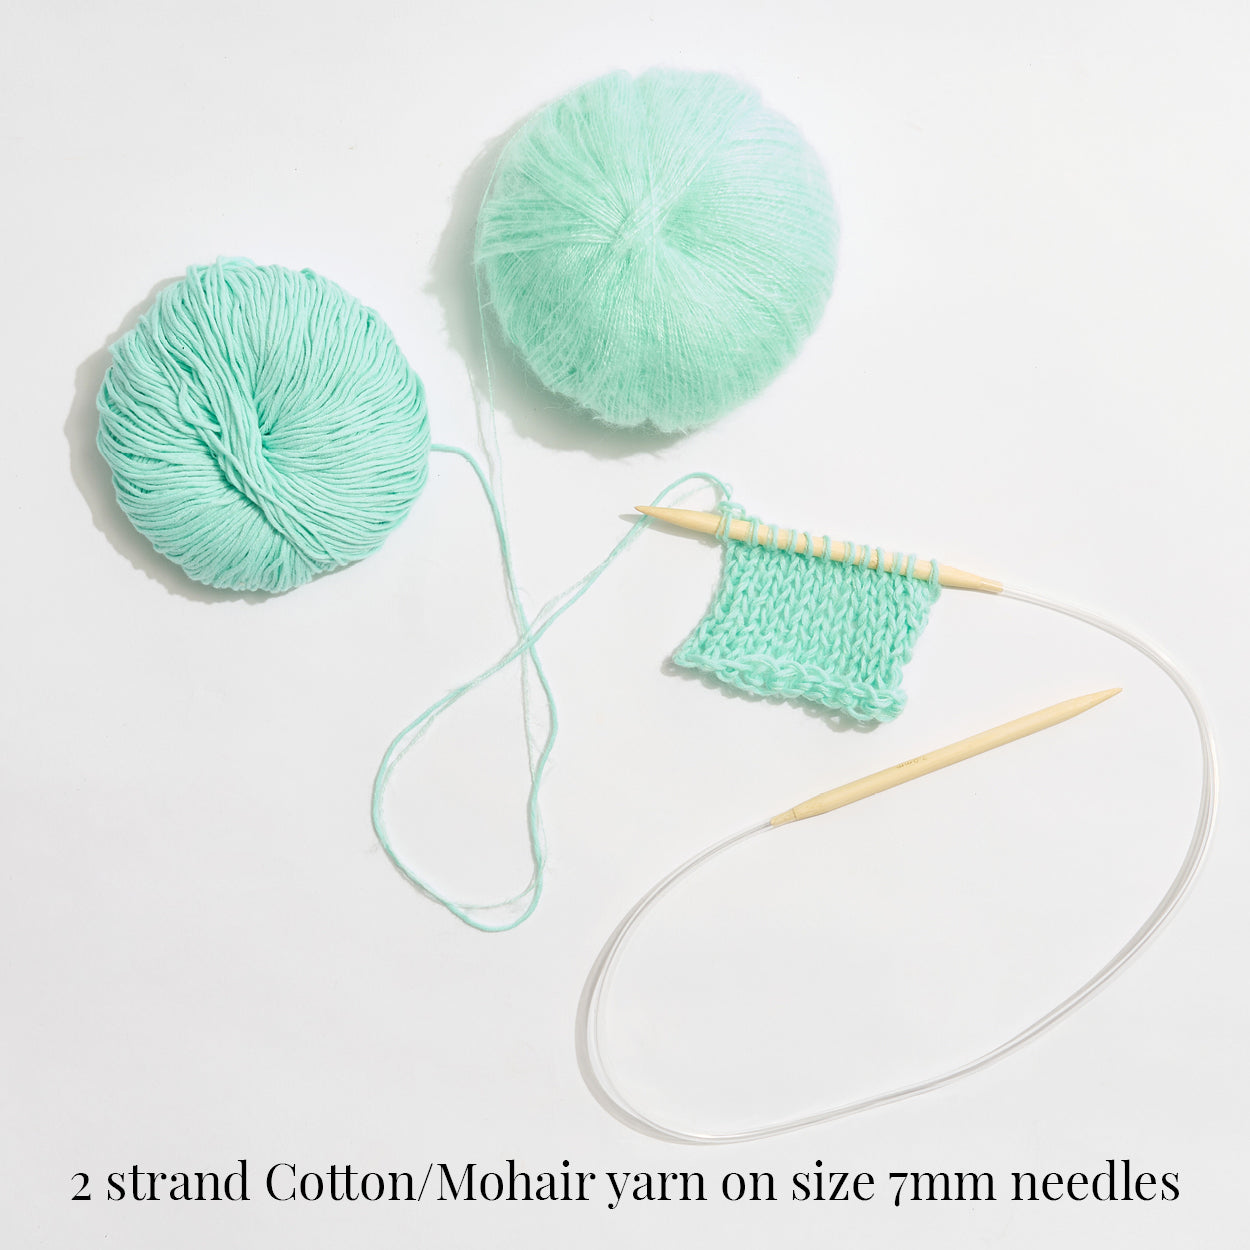 Cotton Yarn- Peach Sorbet